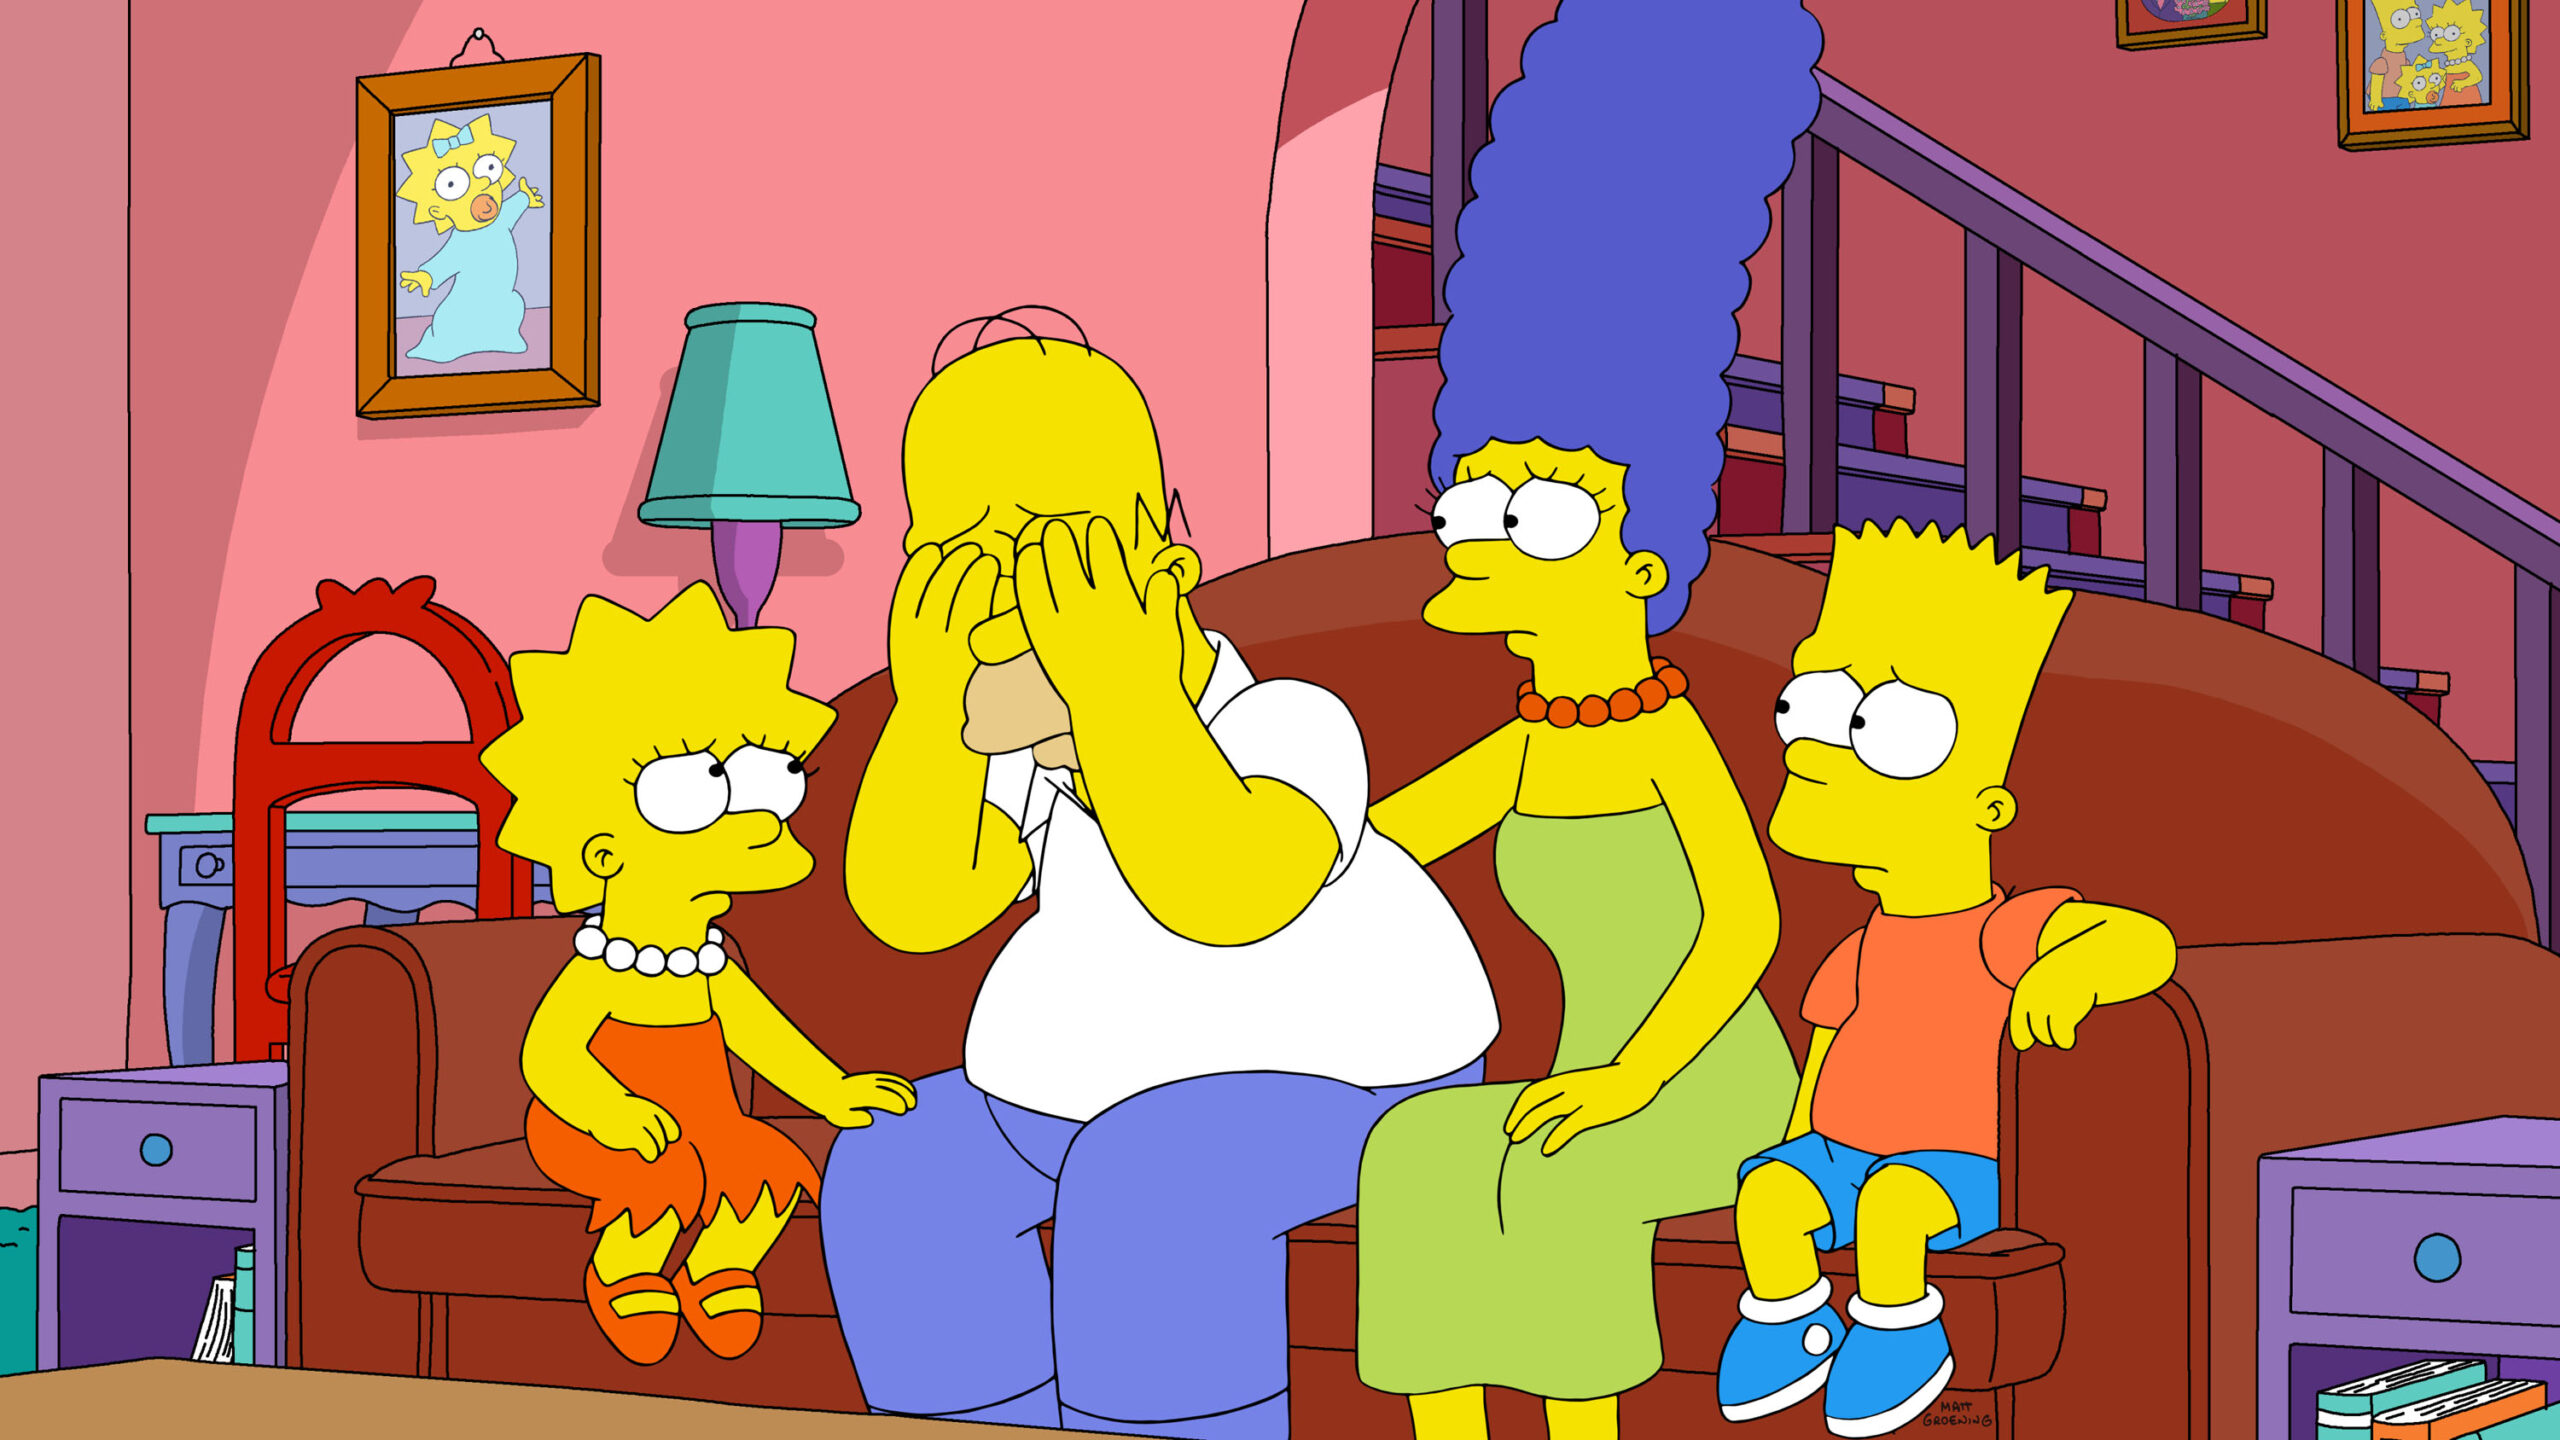 I Simpson 34x01 'Habeas testudo' [credit: The Simpson Copyright 2022 by 20th Television; courtesy of Mediaset]